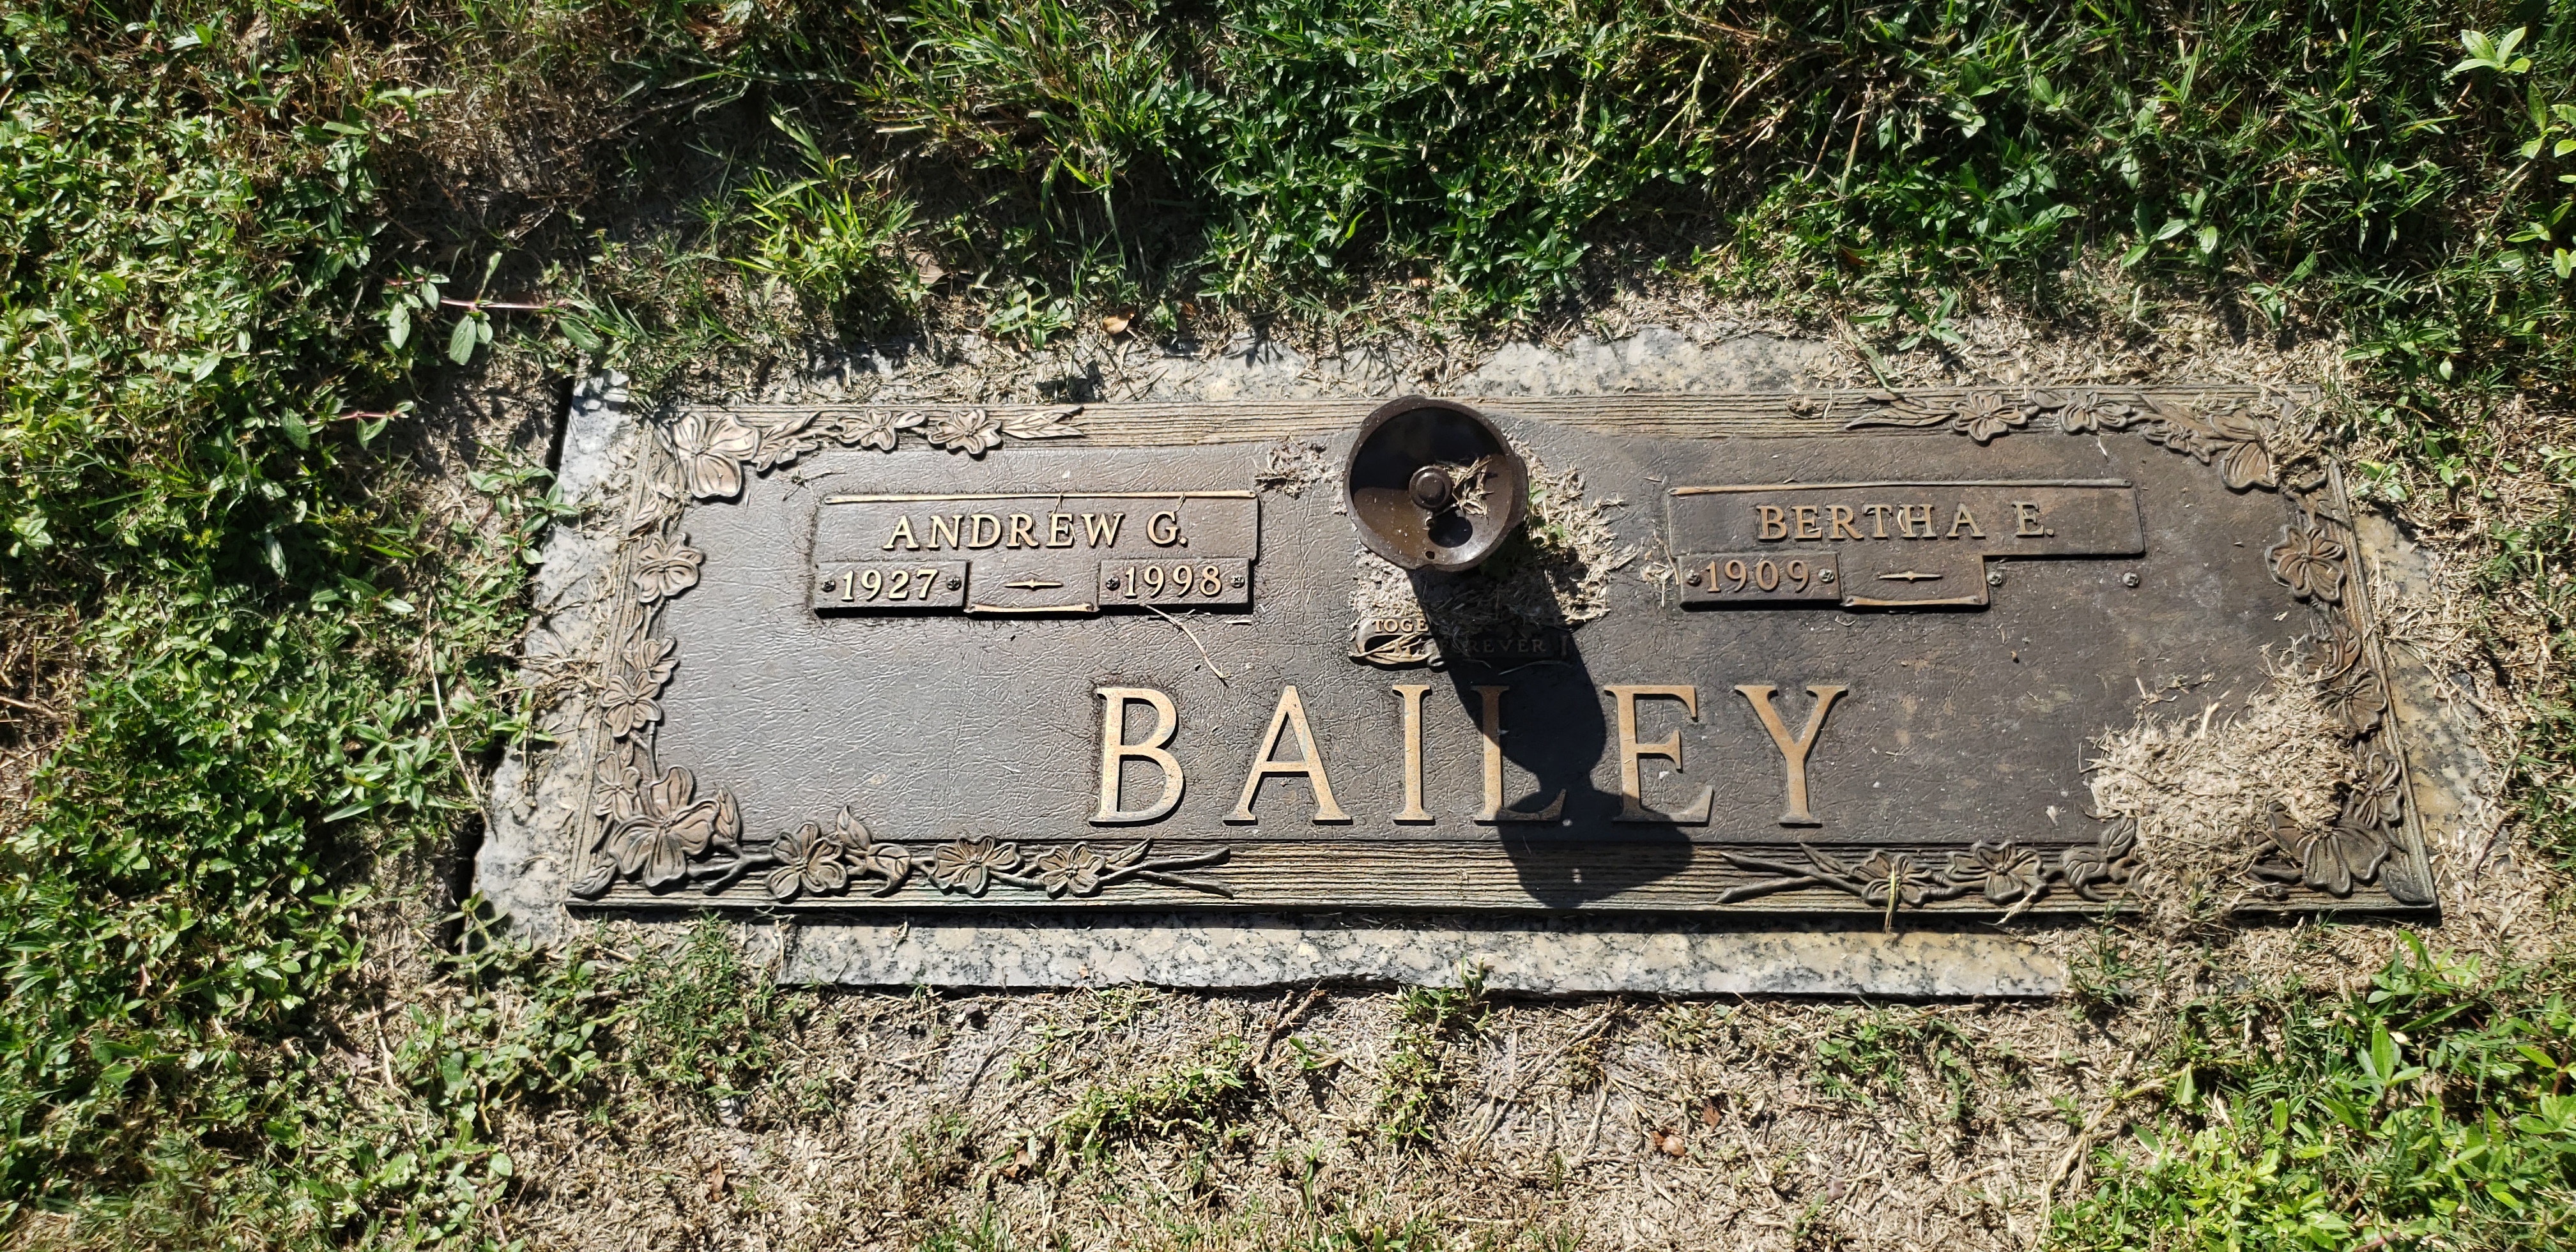 Bertha E Bailey